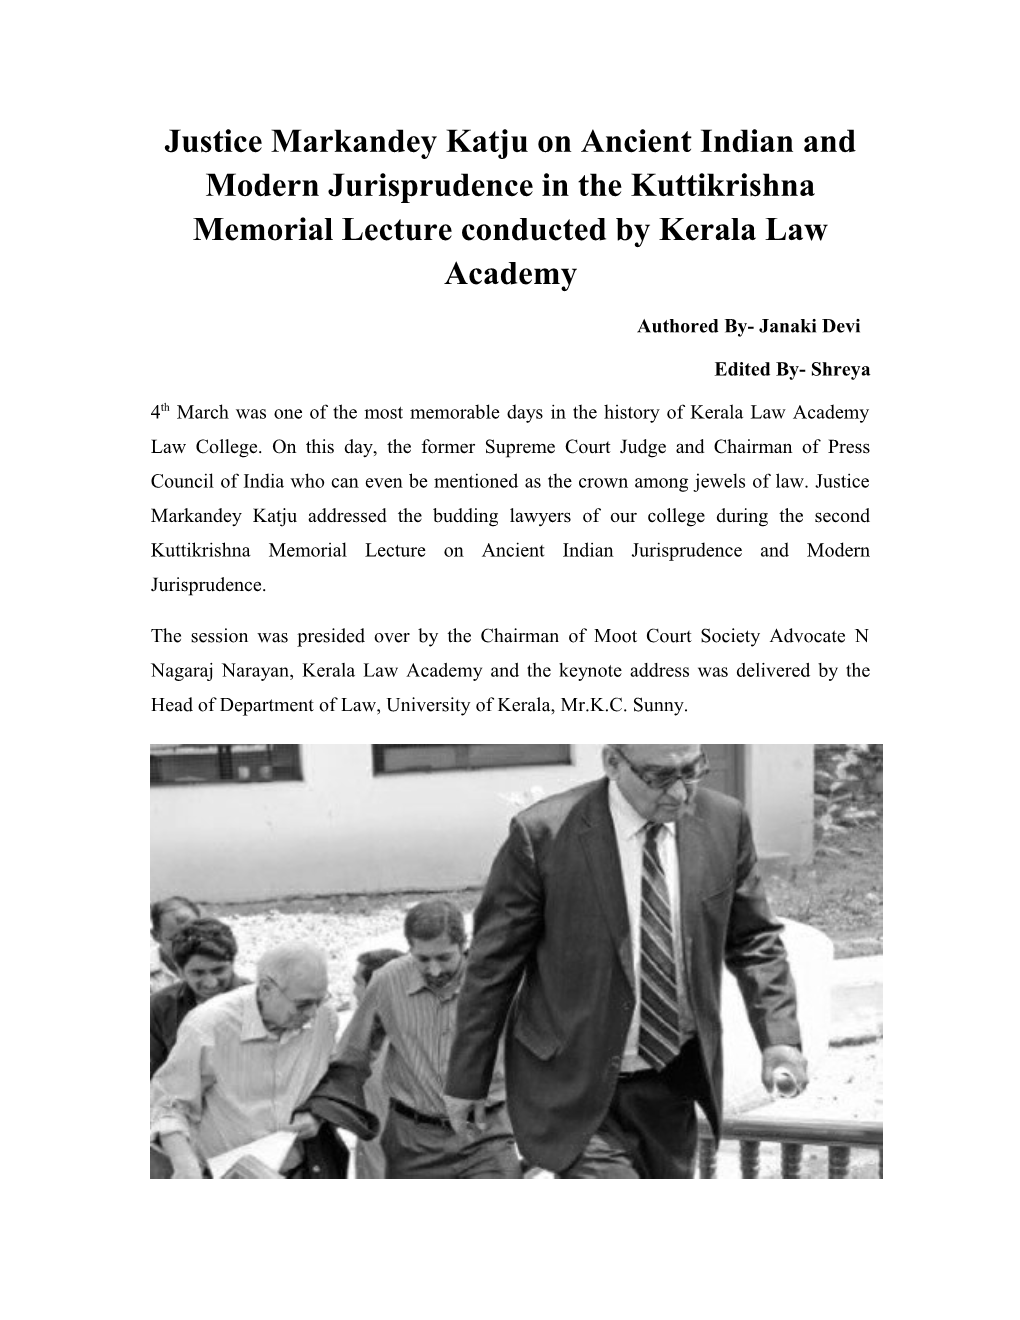 Justice Markandeykatjuon Ancient Indian and Modern Jurisprudence in the Kuttikrishna Memorial